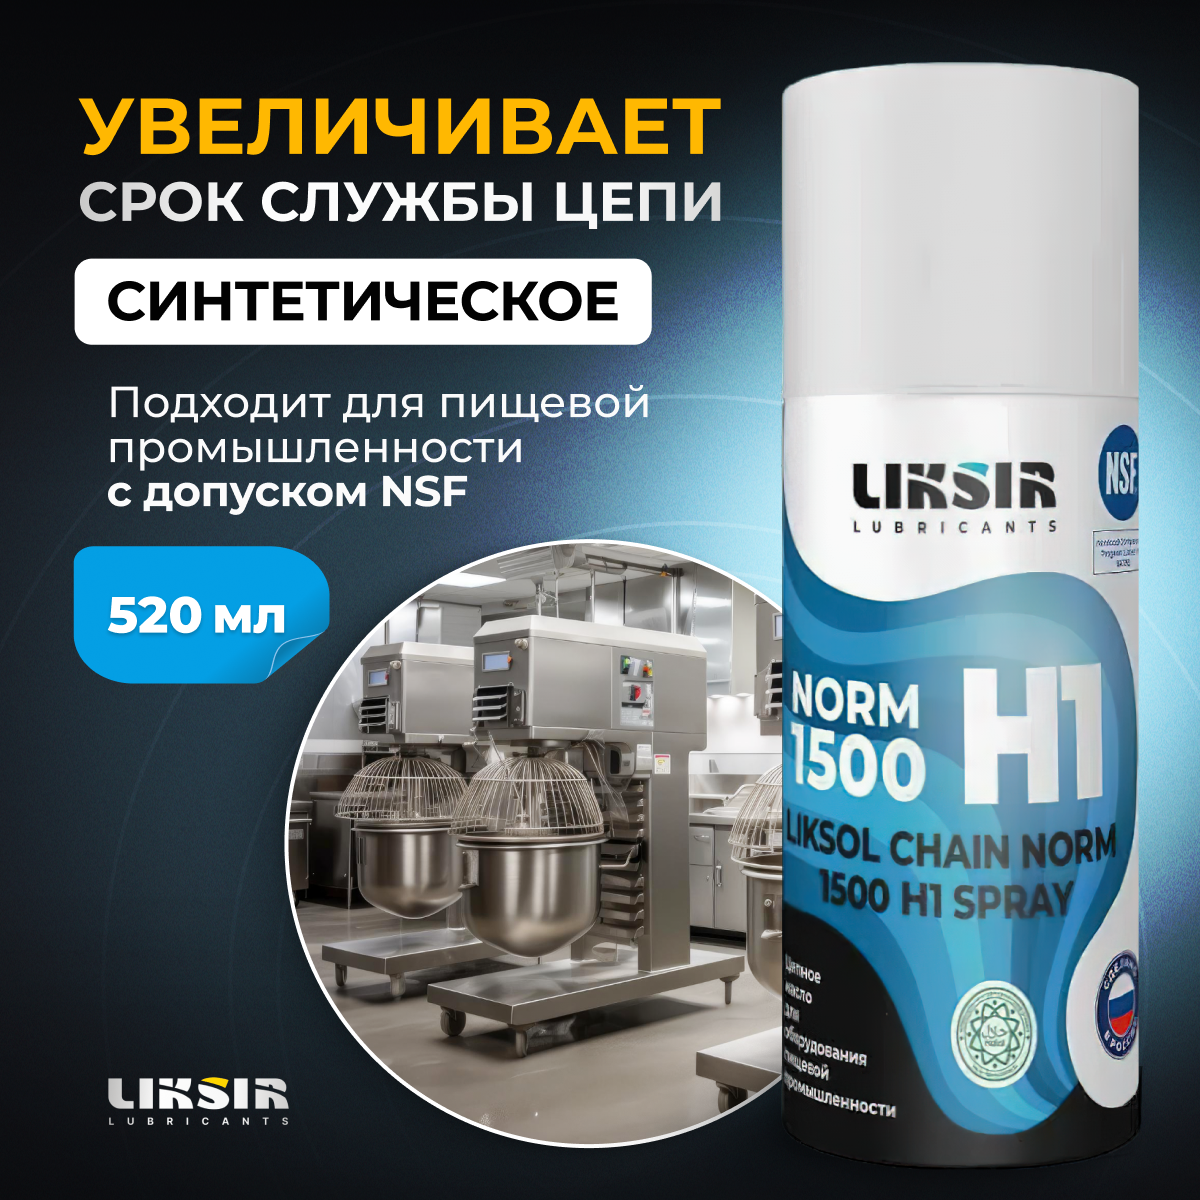 Цепное масло LIKSOL CHAIN NORM 1500 H1 Spray с пищевым допуском, 500106, 520 мл